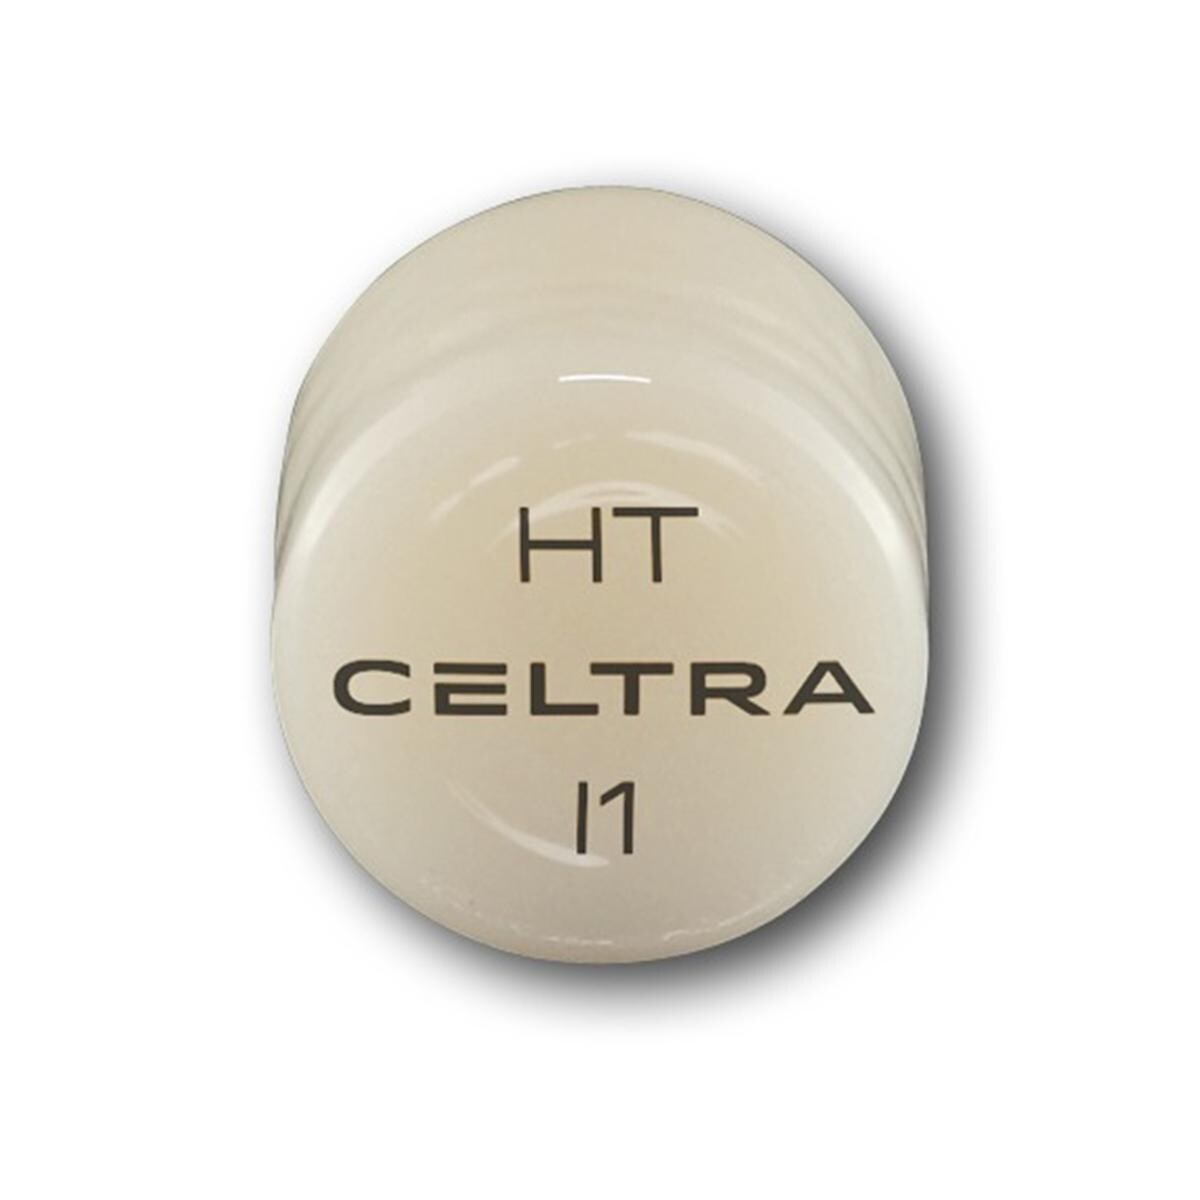 CELTRA® Press HT - I1, Packung 5 x 3 g